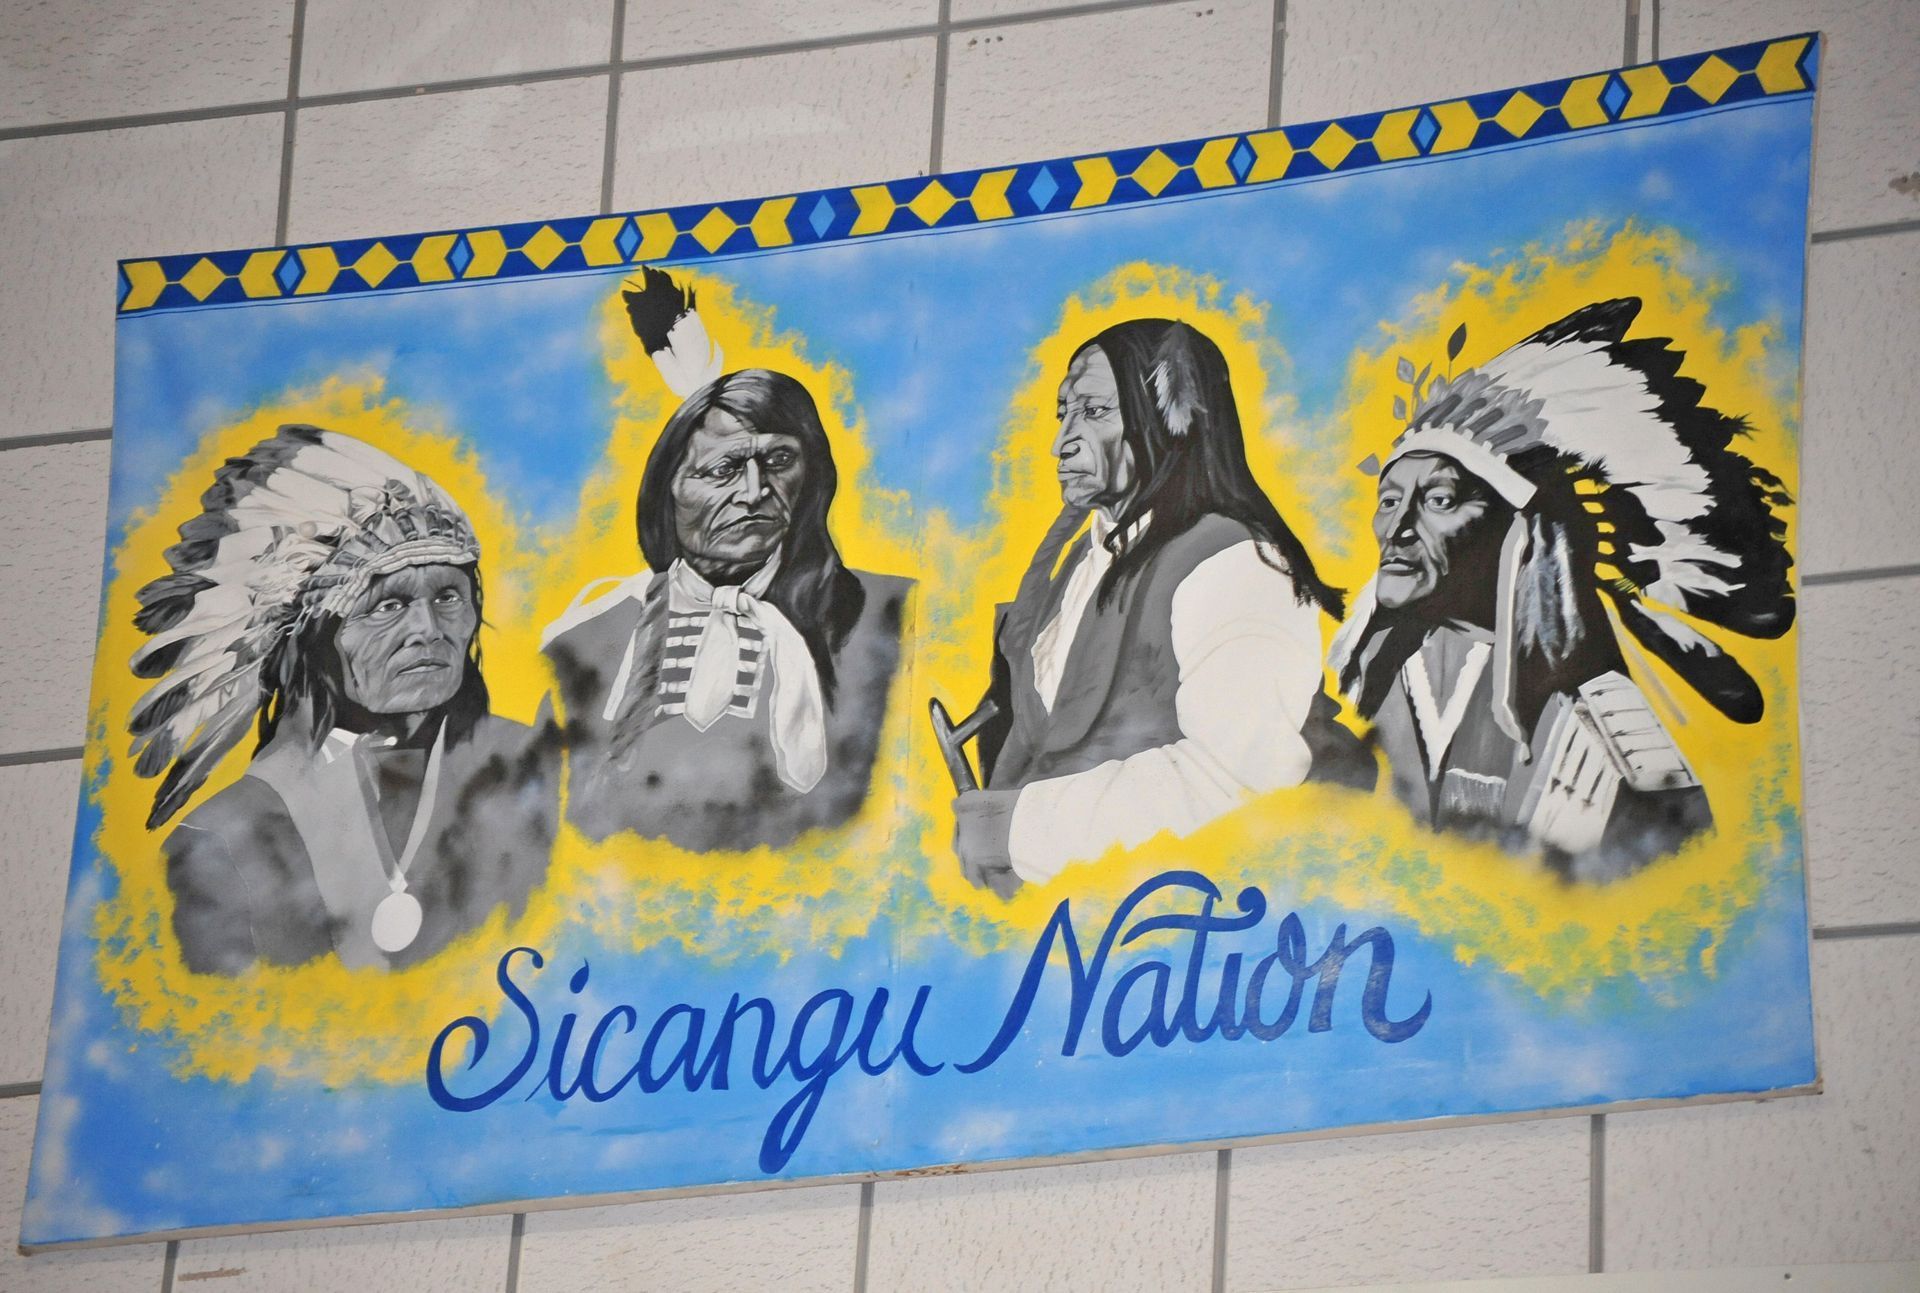 Sicangu Lakota Sioux Nation flag